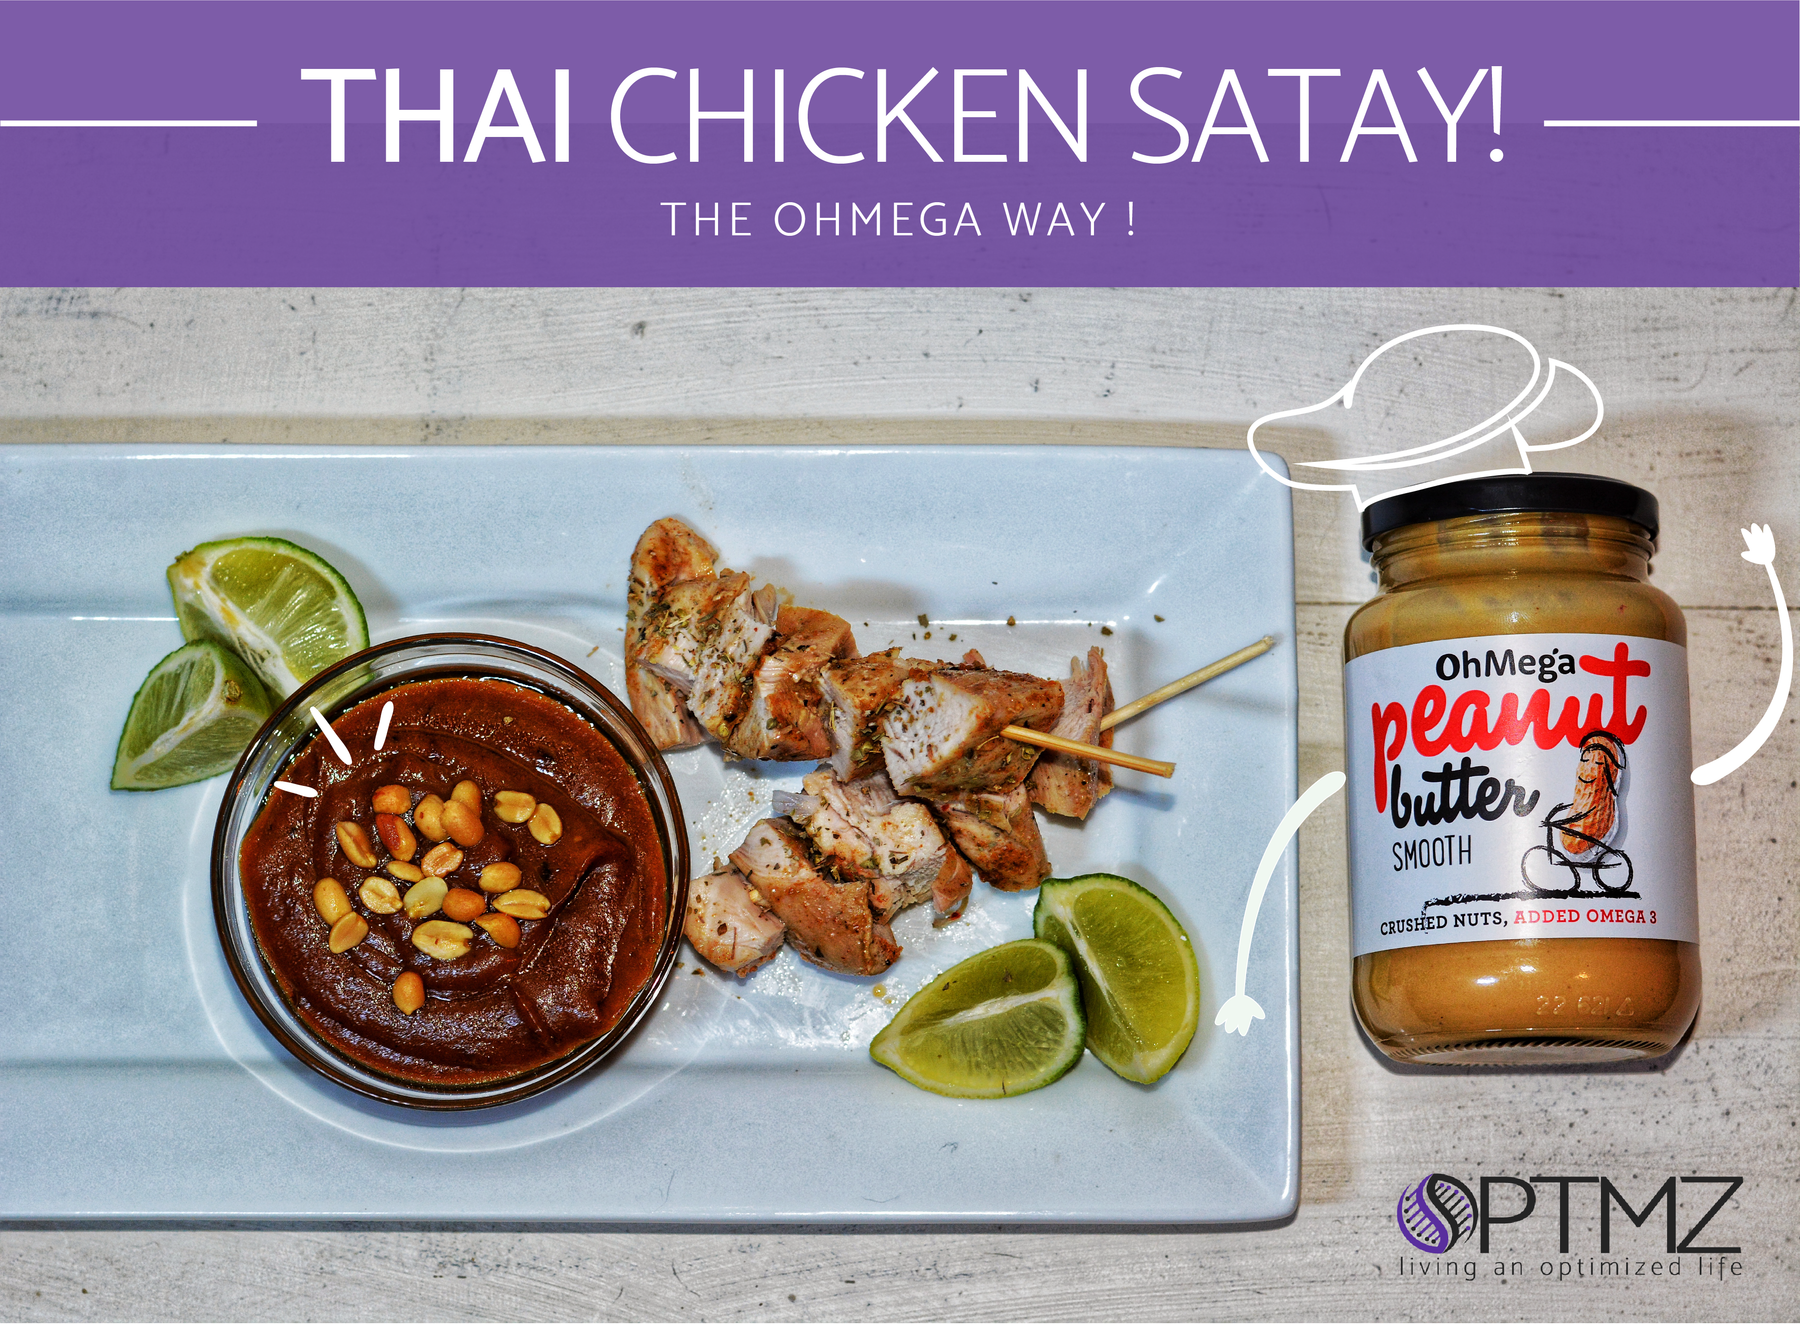 Thai Chicken Satay - The Oh Mega Way